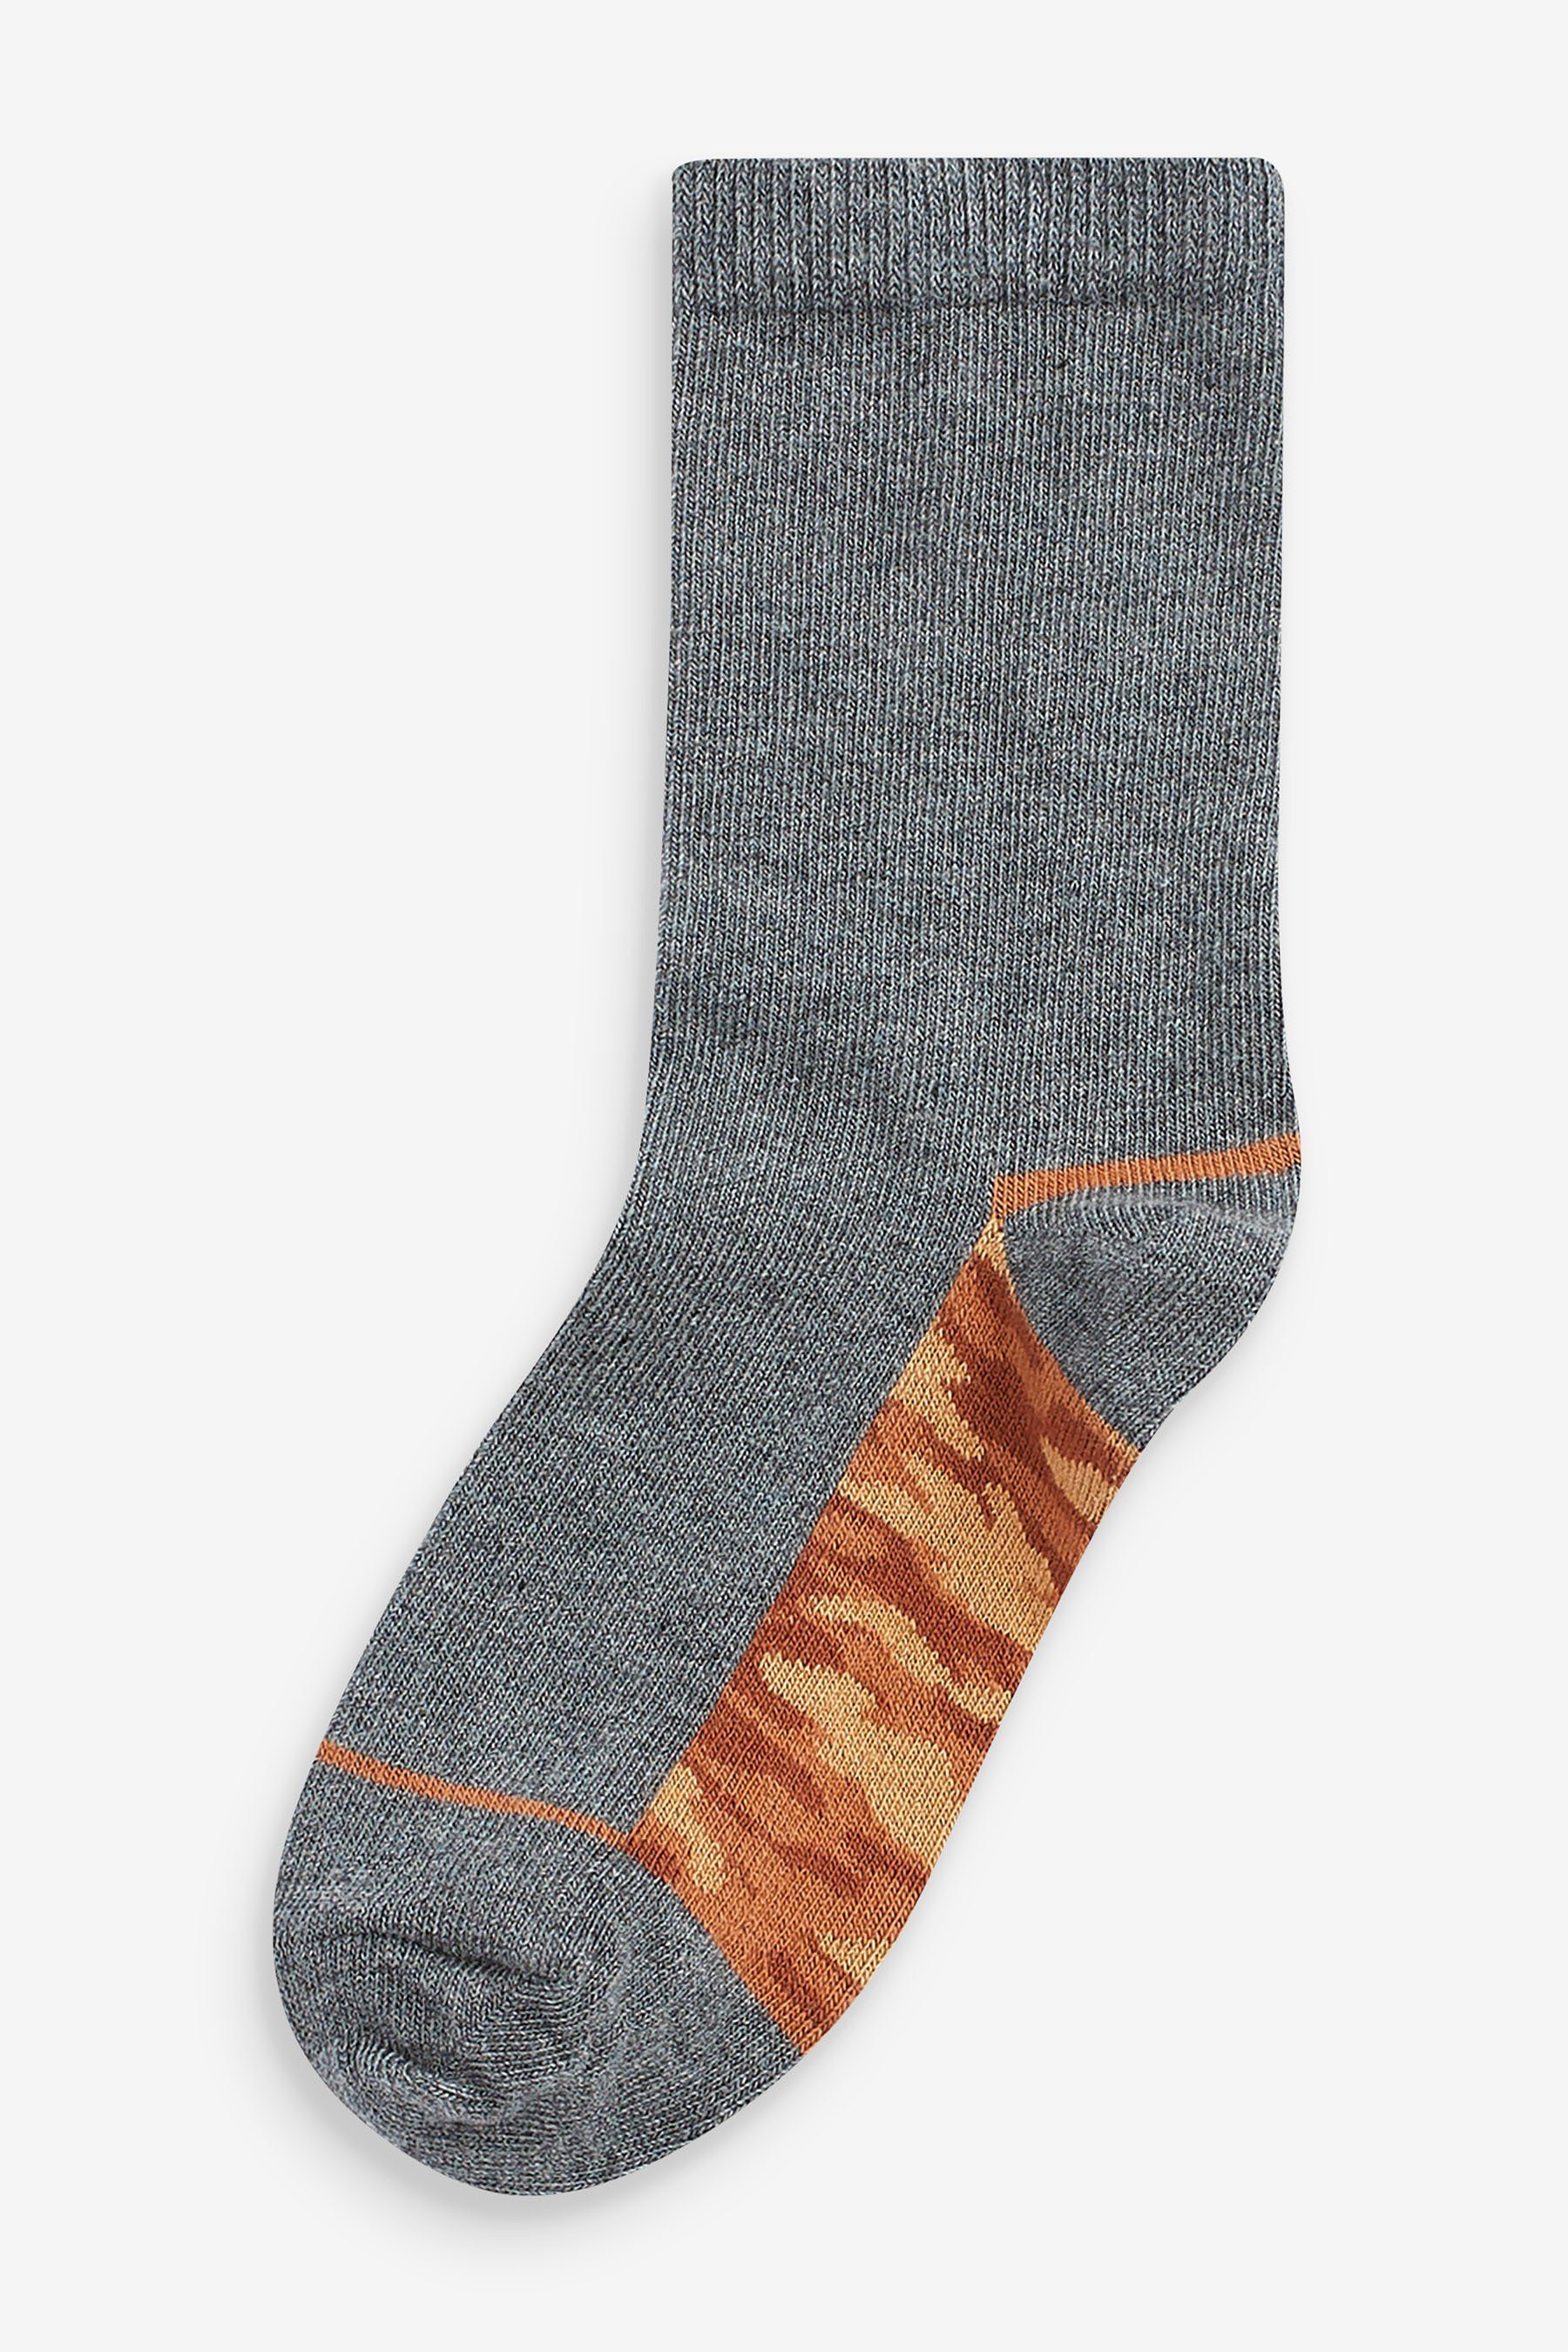 Wäsche/Bademode Socken Next Kurzsocken Socken mit hohem Baumwollanteil, 7er-Pack (7-Paar)